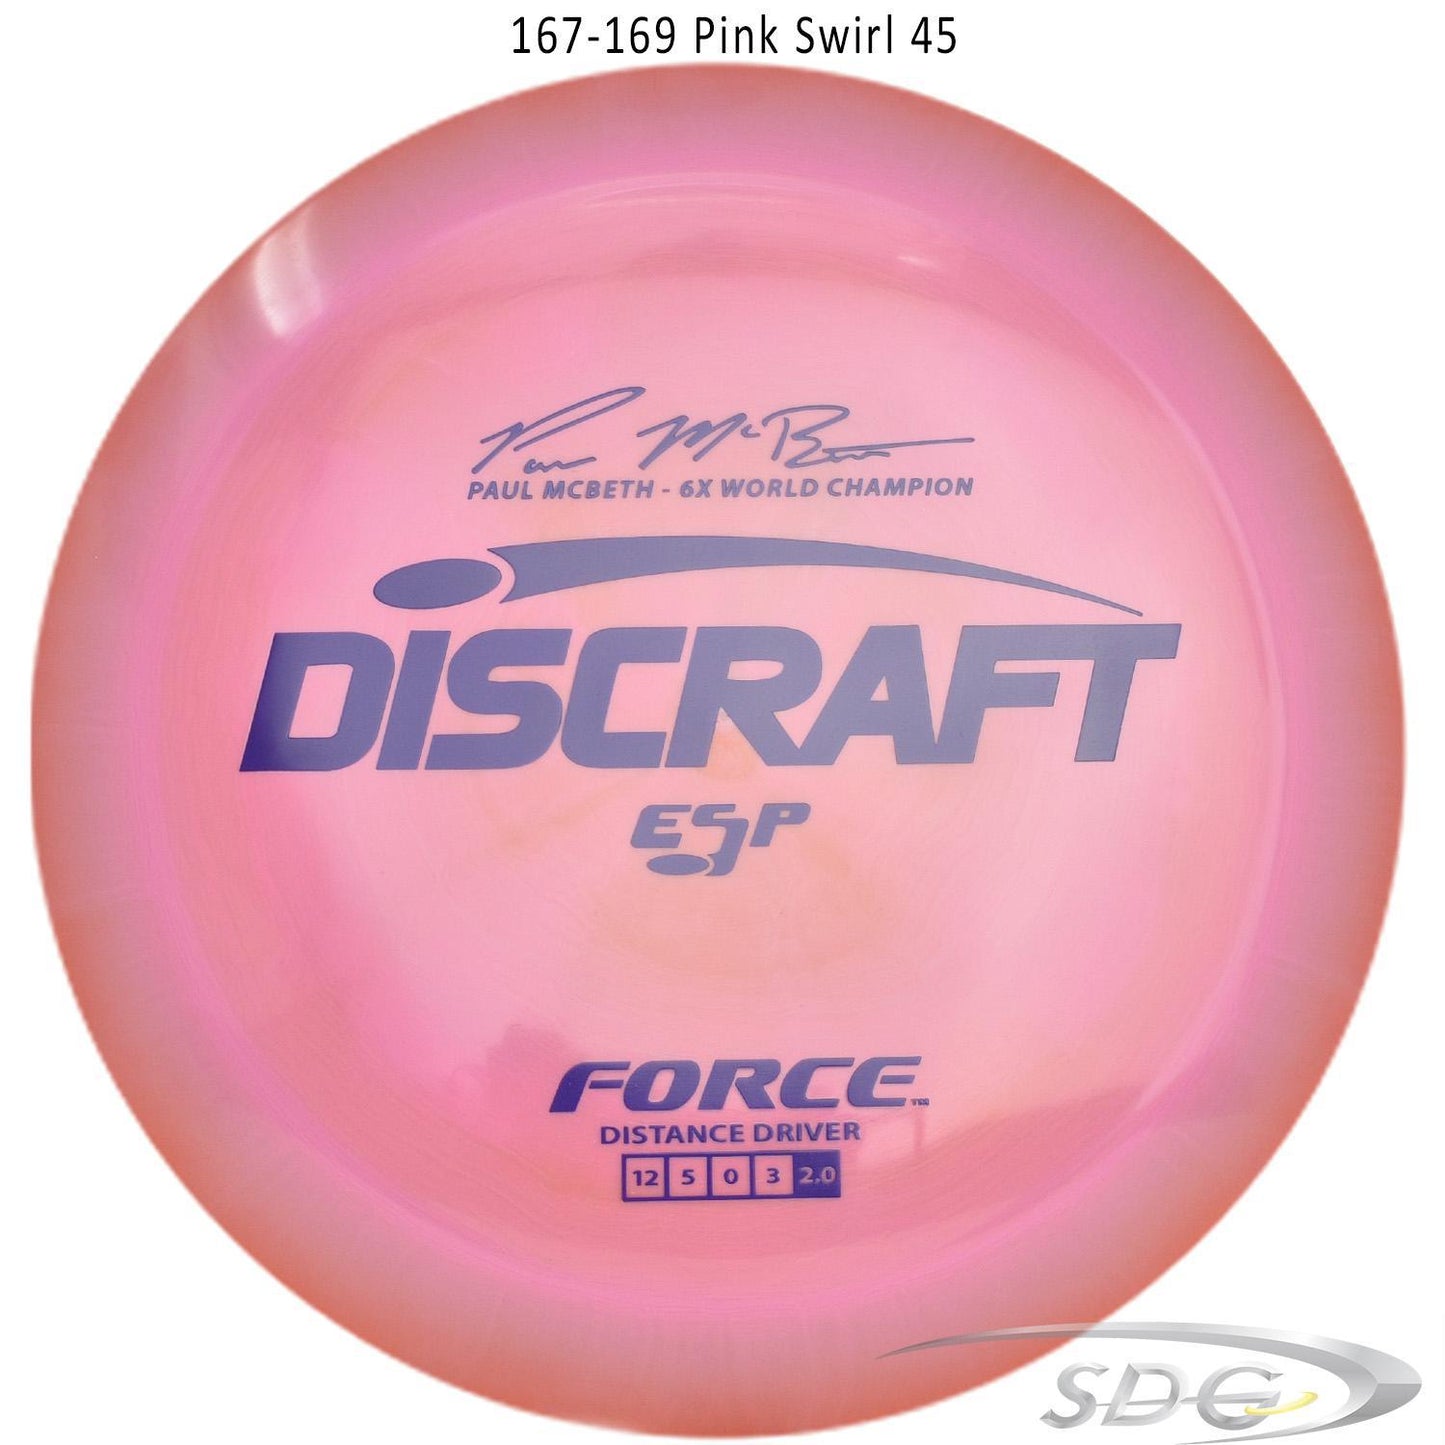 discraft-esp-force-6x-paul-mcbeth-signature-disc-golf-distance-driver-169-160-weights 167-169 Pink Swirl 45 